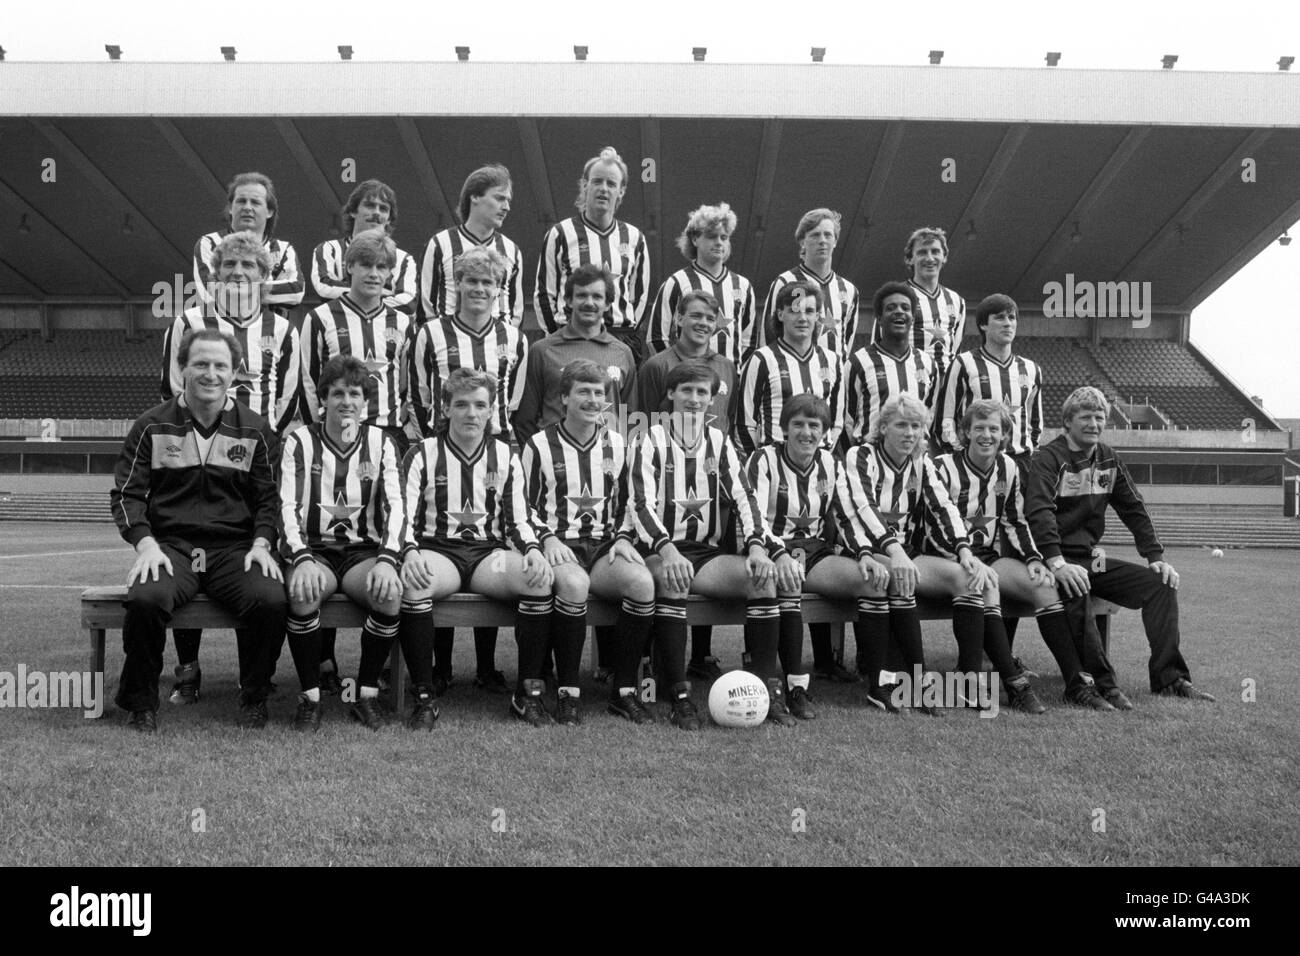 Soccer - Newcastle United Photocall - St James' Park Stock Photo